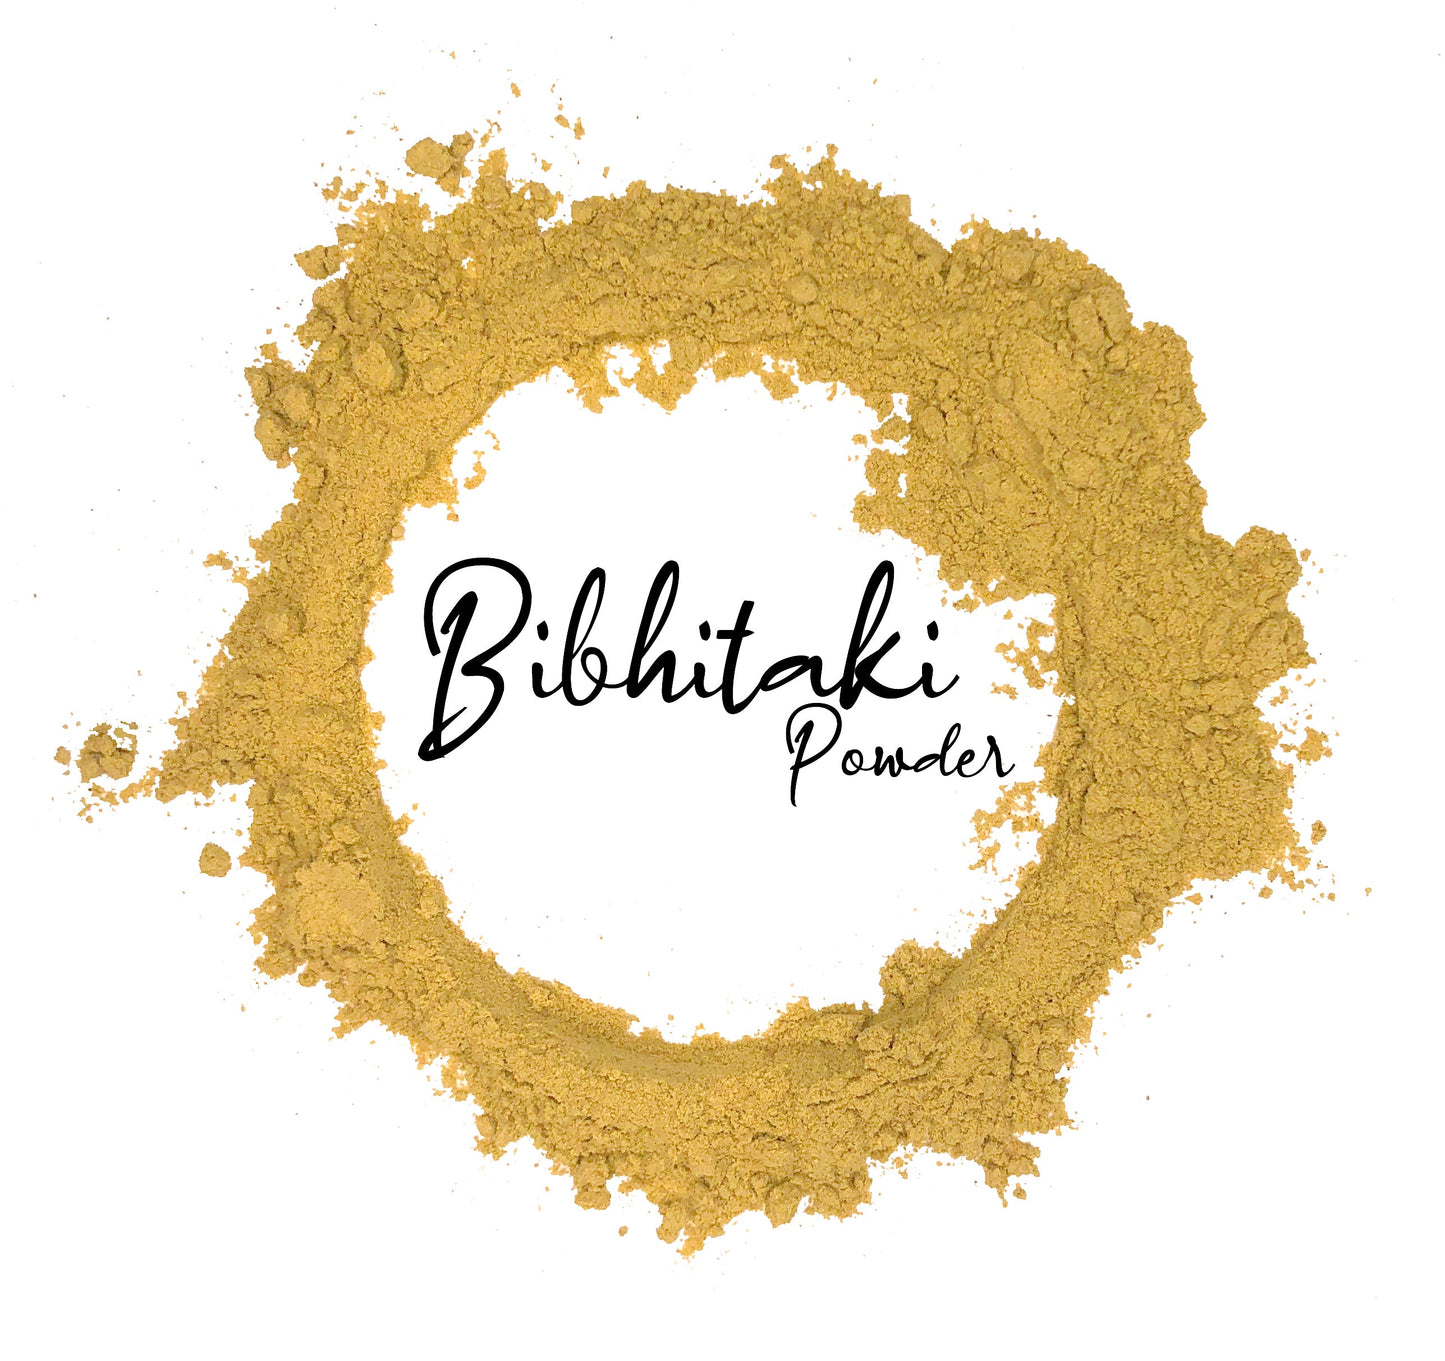 Wholesale Spices & Herbs - Bibhitaki Powder, Organic 4.4oz (124g) Jar